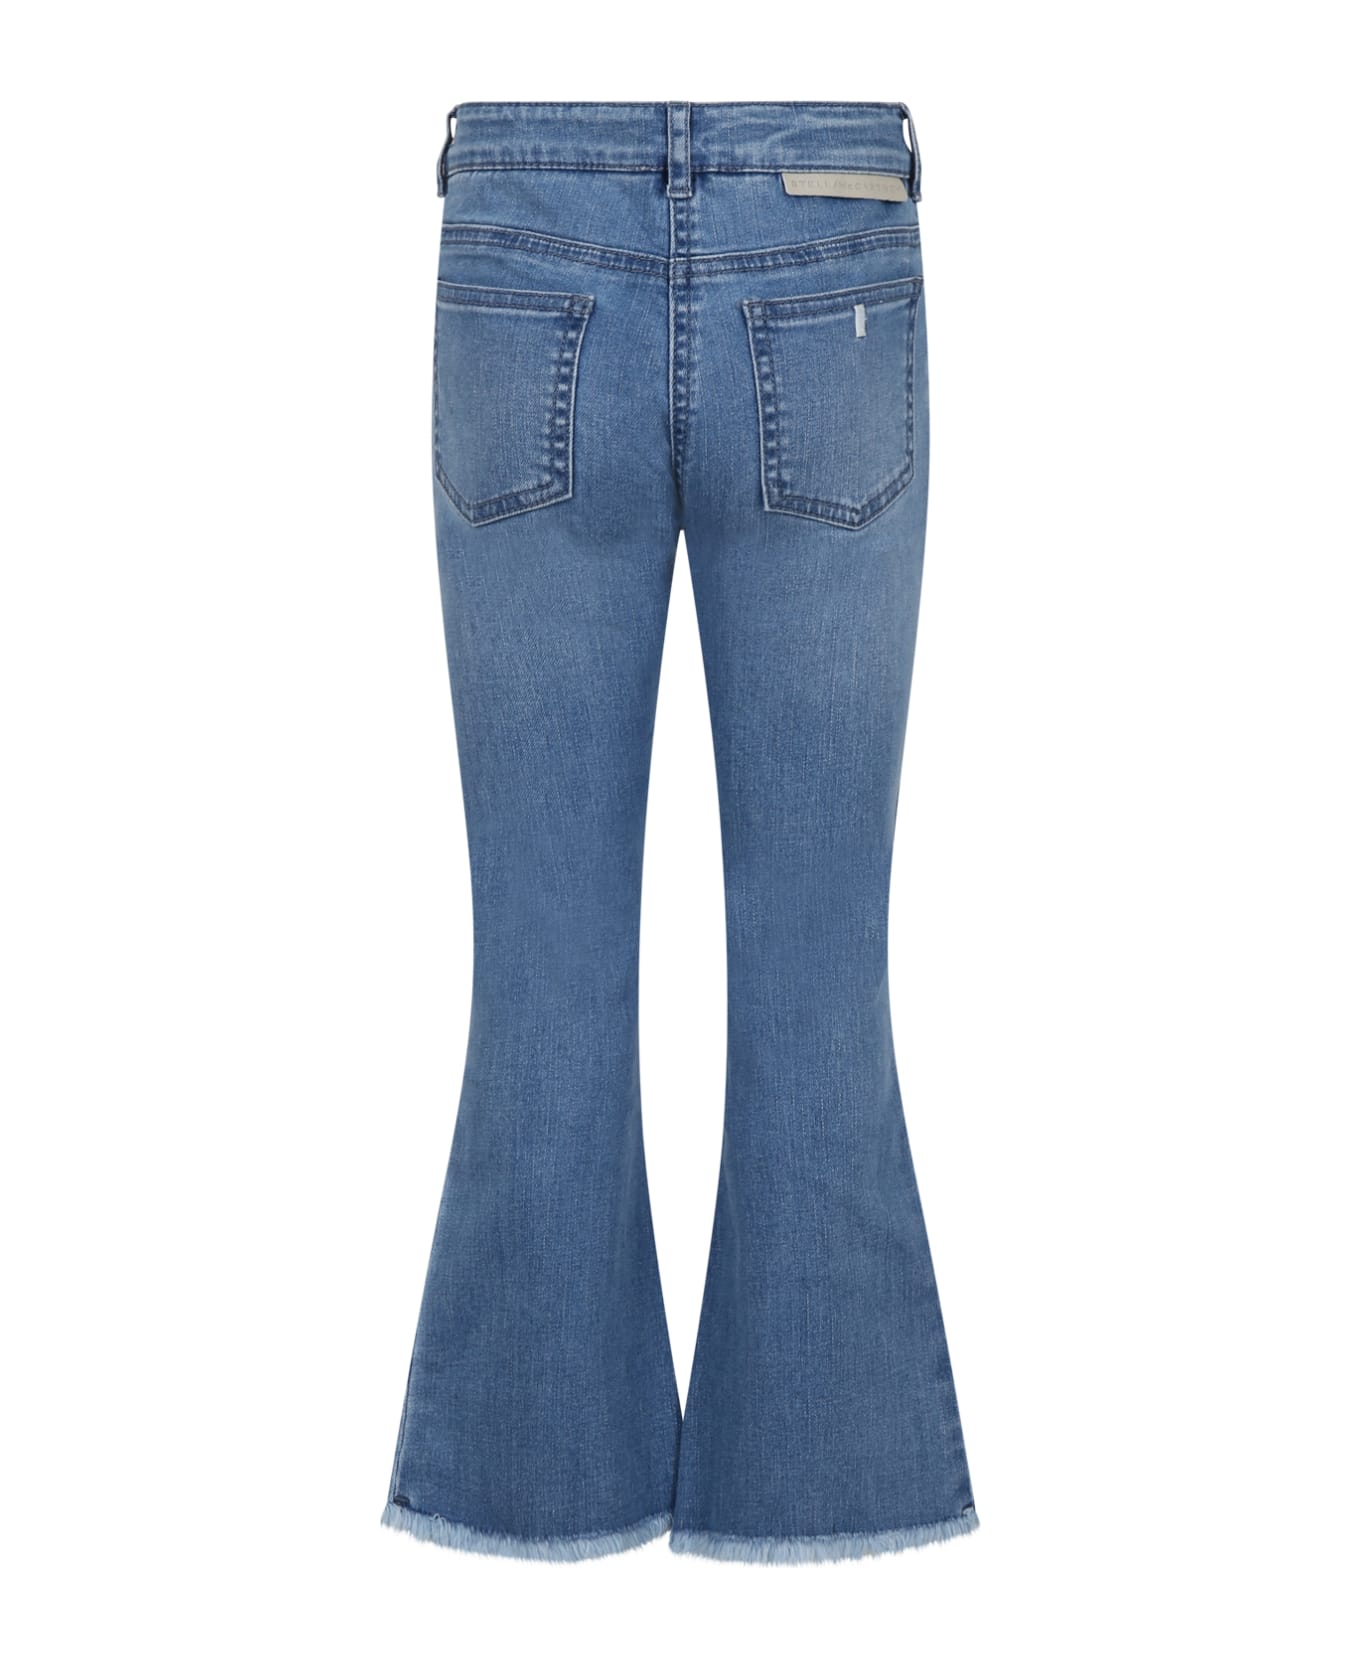 Stella McCartney Kids Denim Flare Jeans For Girl With Fringes - Denim ボトムス